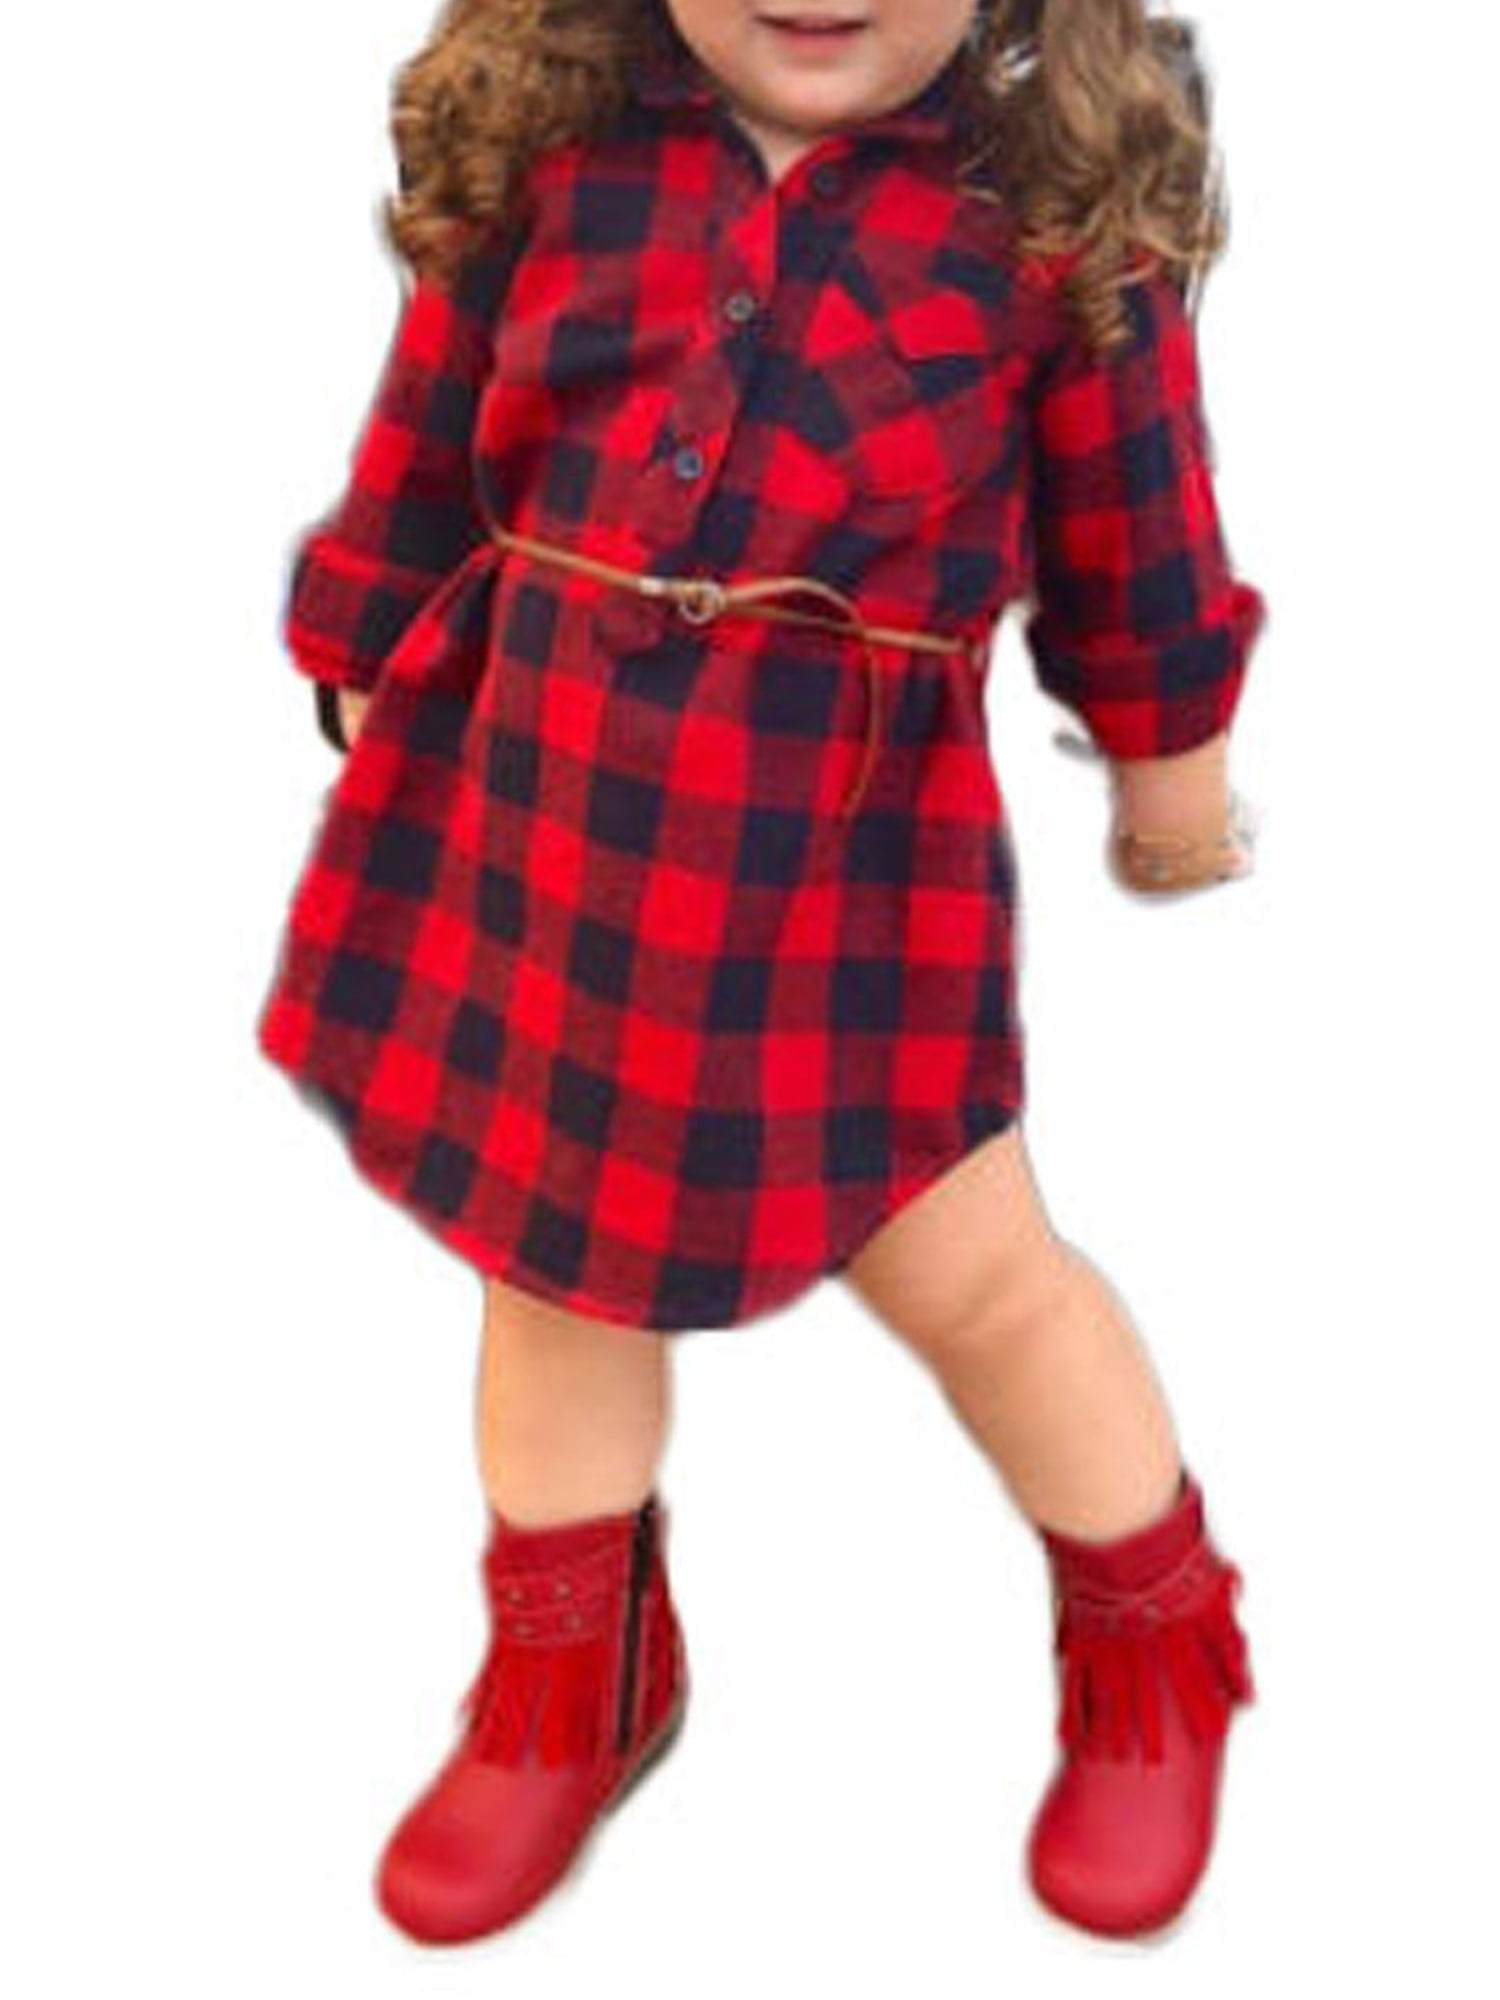 Details about   Oshkosh Toddler Girls Red Dress Plaid Bow Ruffled Bodice Size 24 Months 